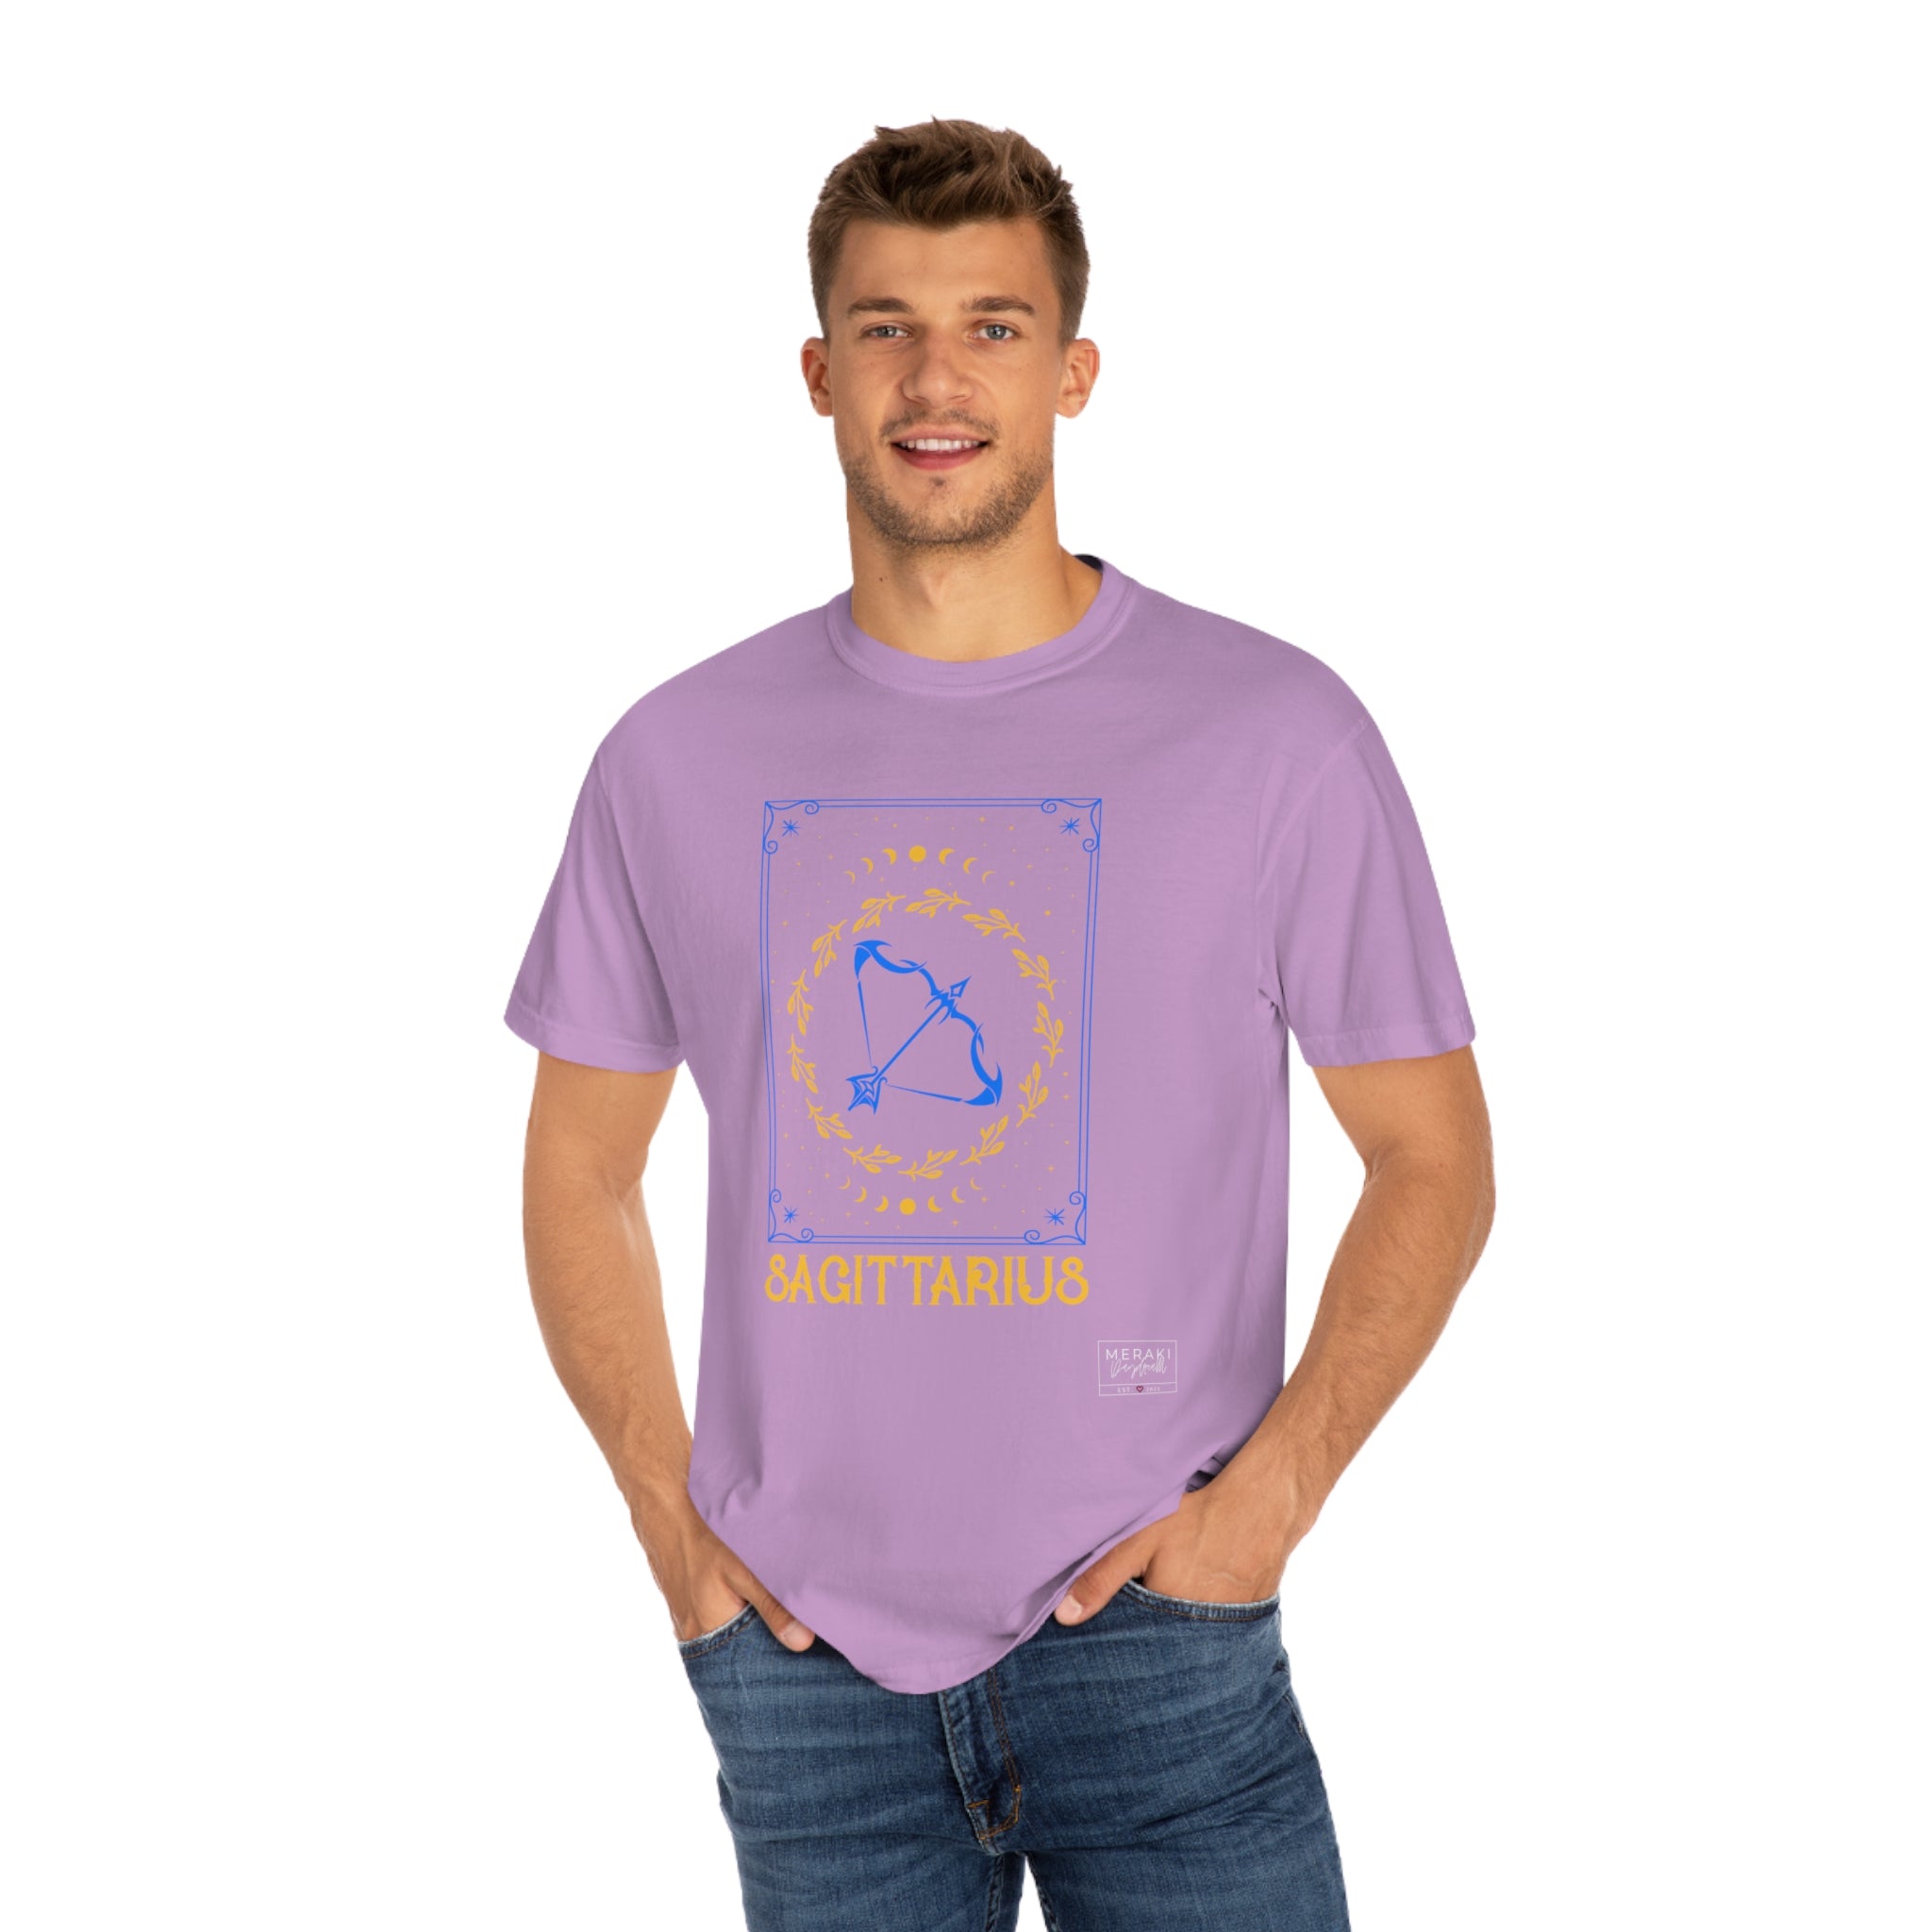 Unisex Sagittarius Zodiac Sign T-Shirt